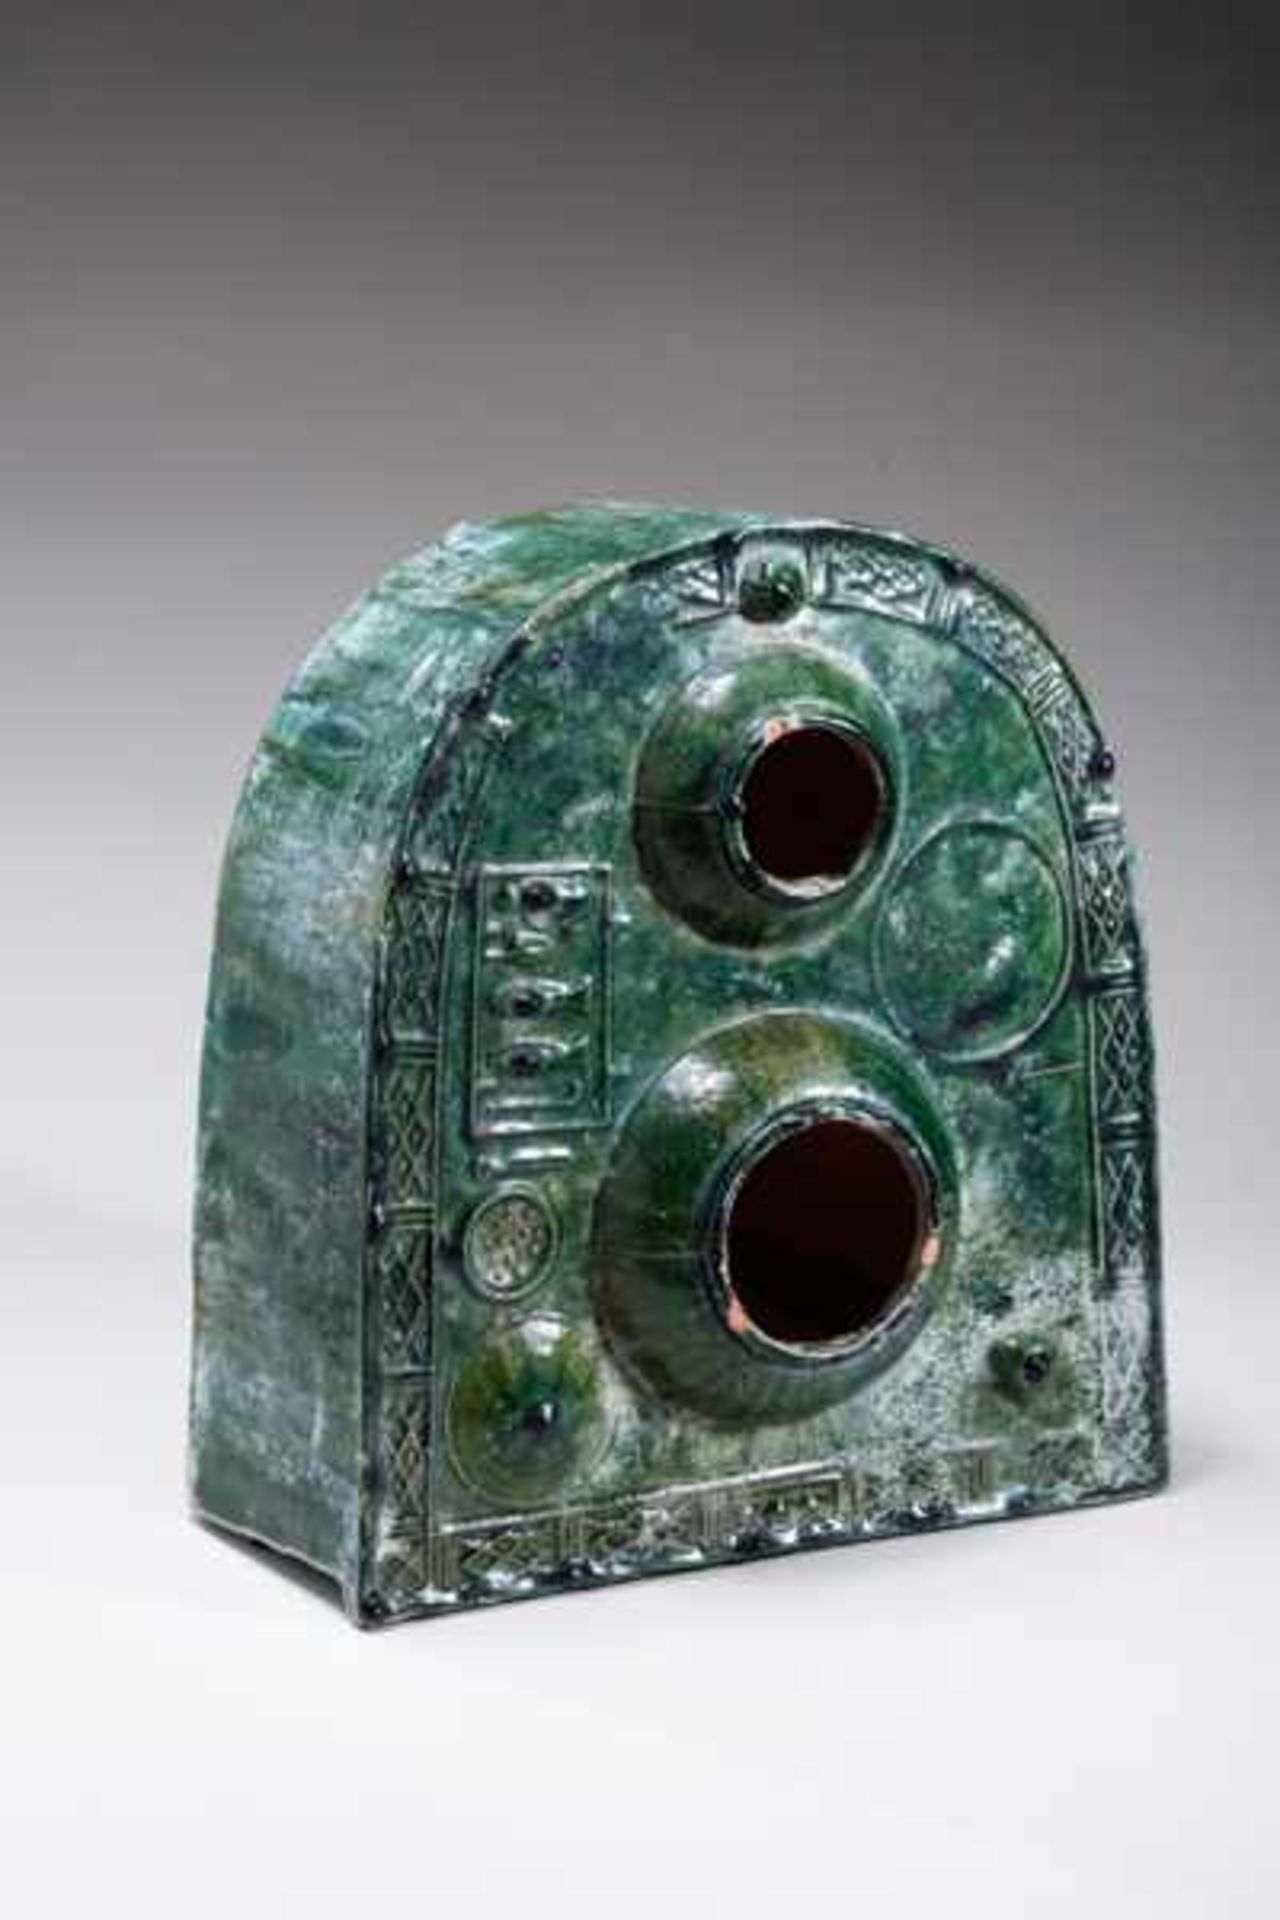 OVEN Glazed ceramic. China, Han dynasty (206 BCE - 220 CE)陶爐Fine, slightly curved form. Fascinating, - Image 4 of 5